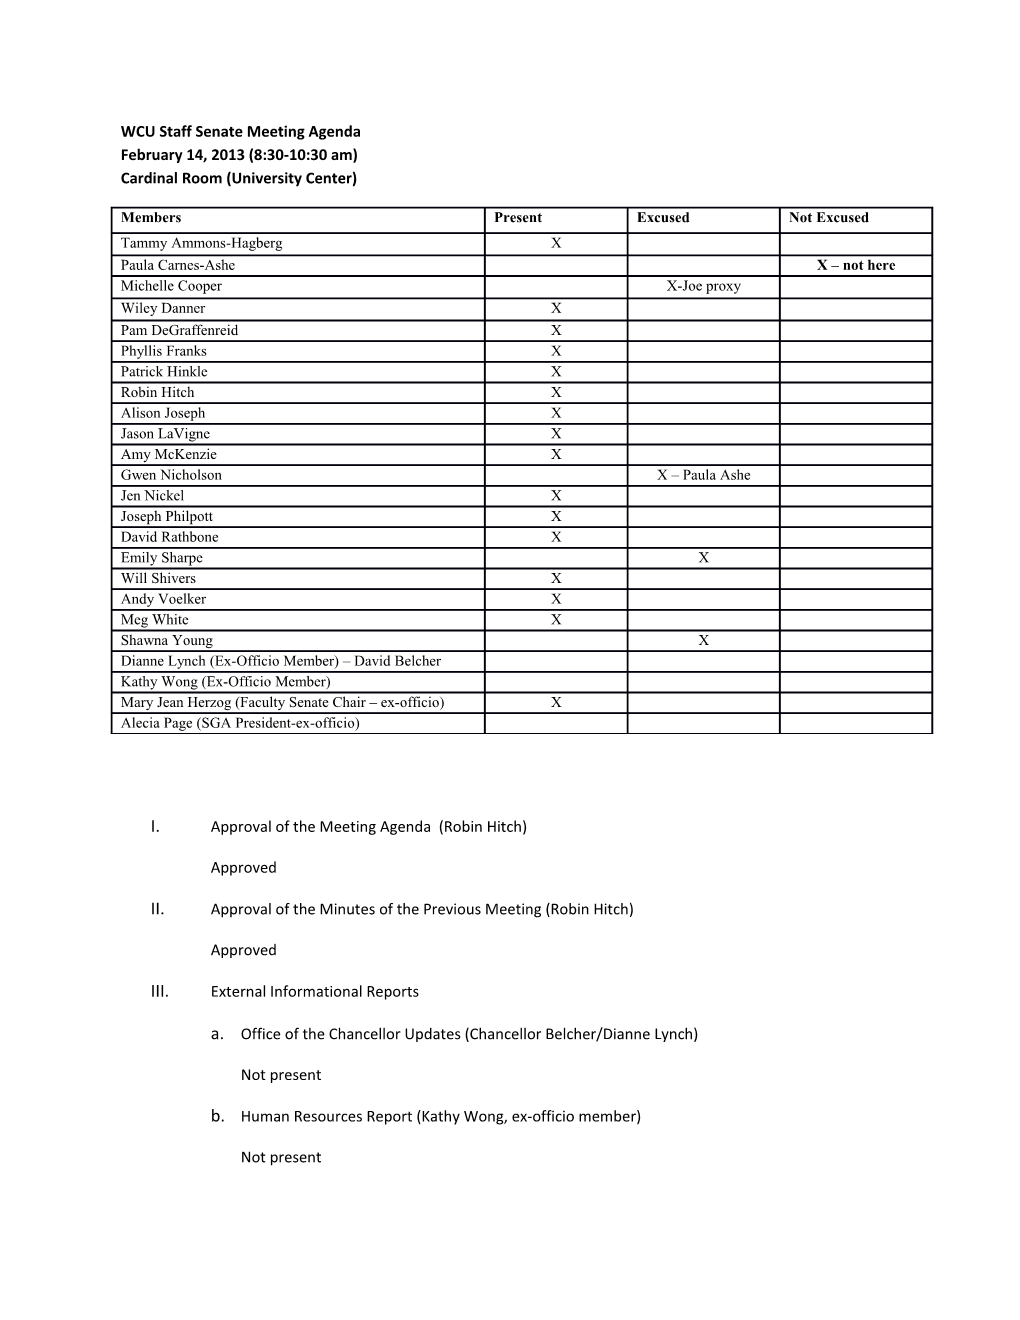 Staff Senate Minutes - February 2013